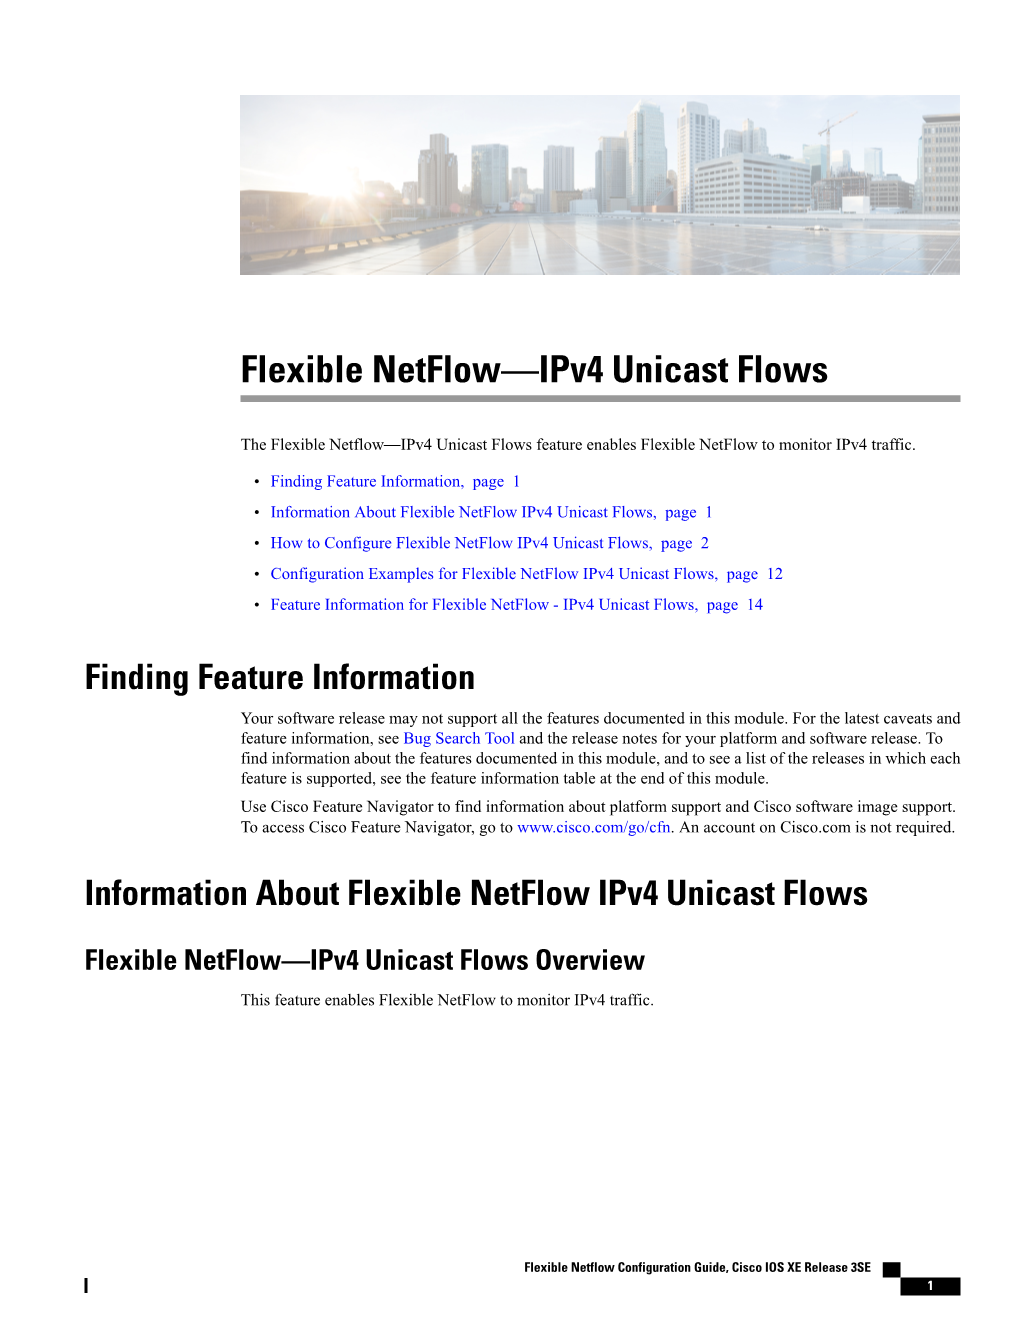 Flexible Netflow—Ipv4 Unicast Flows